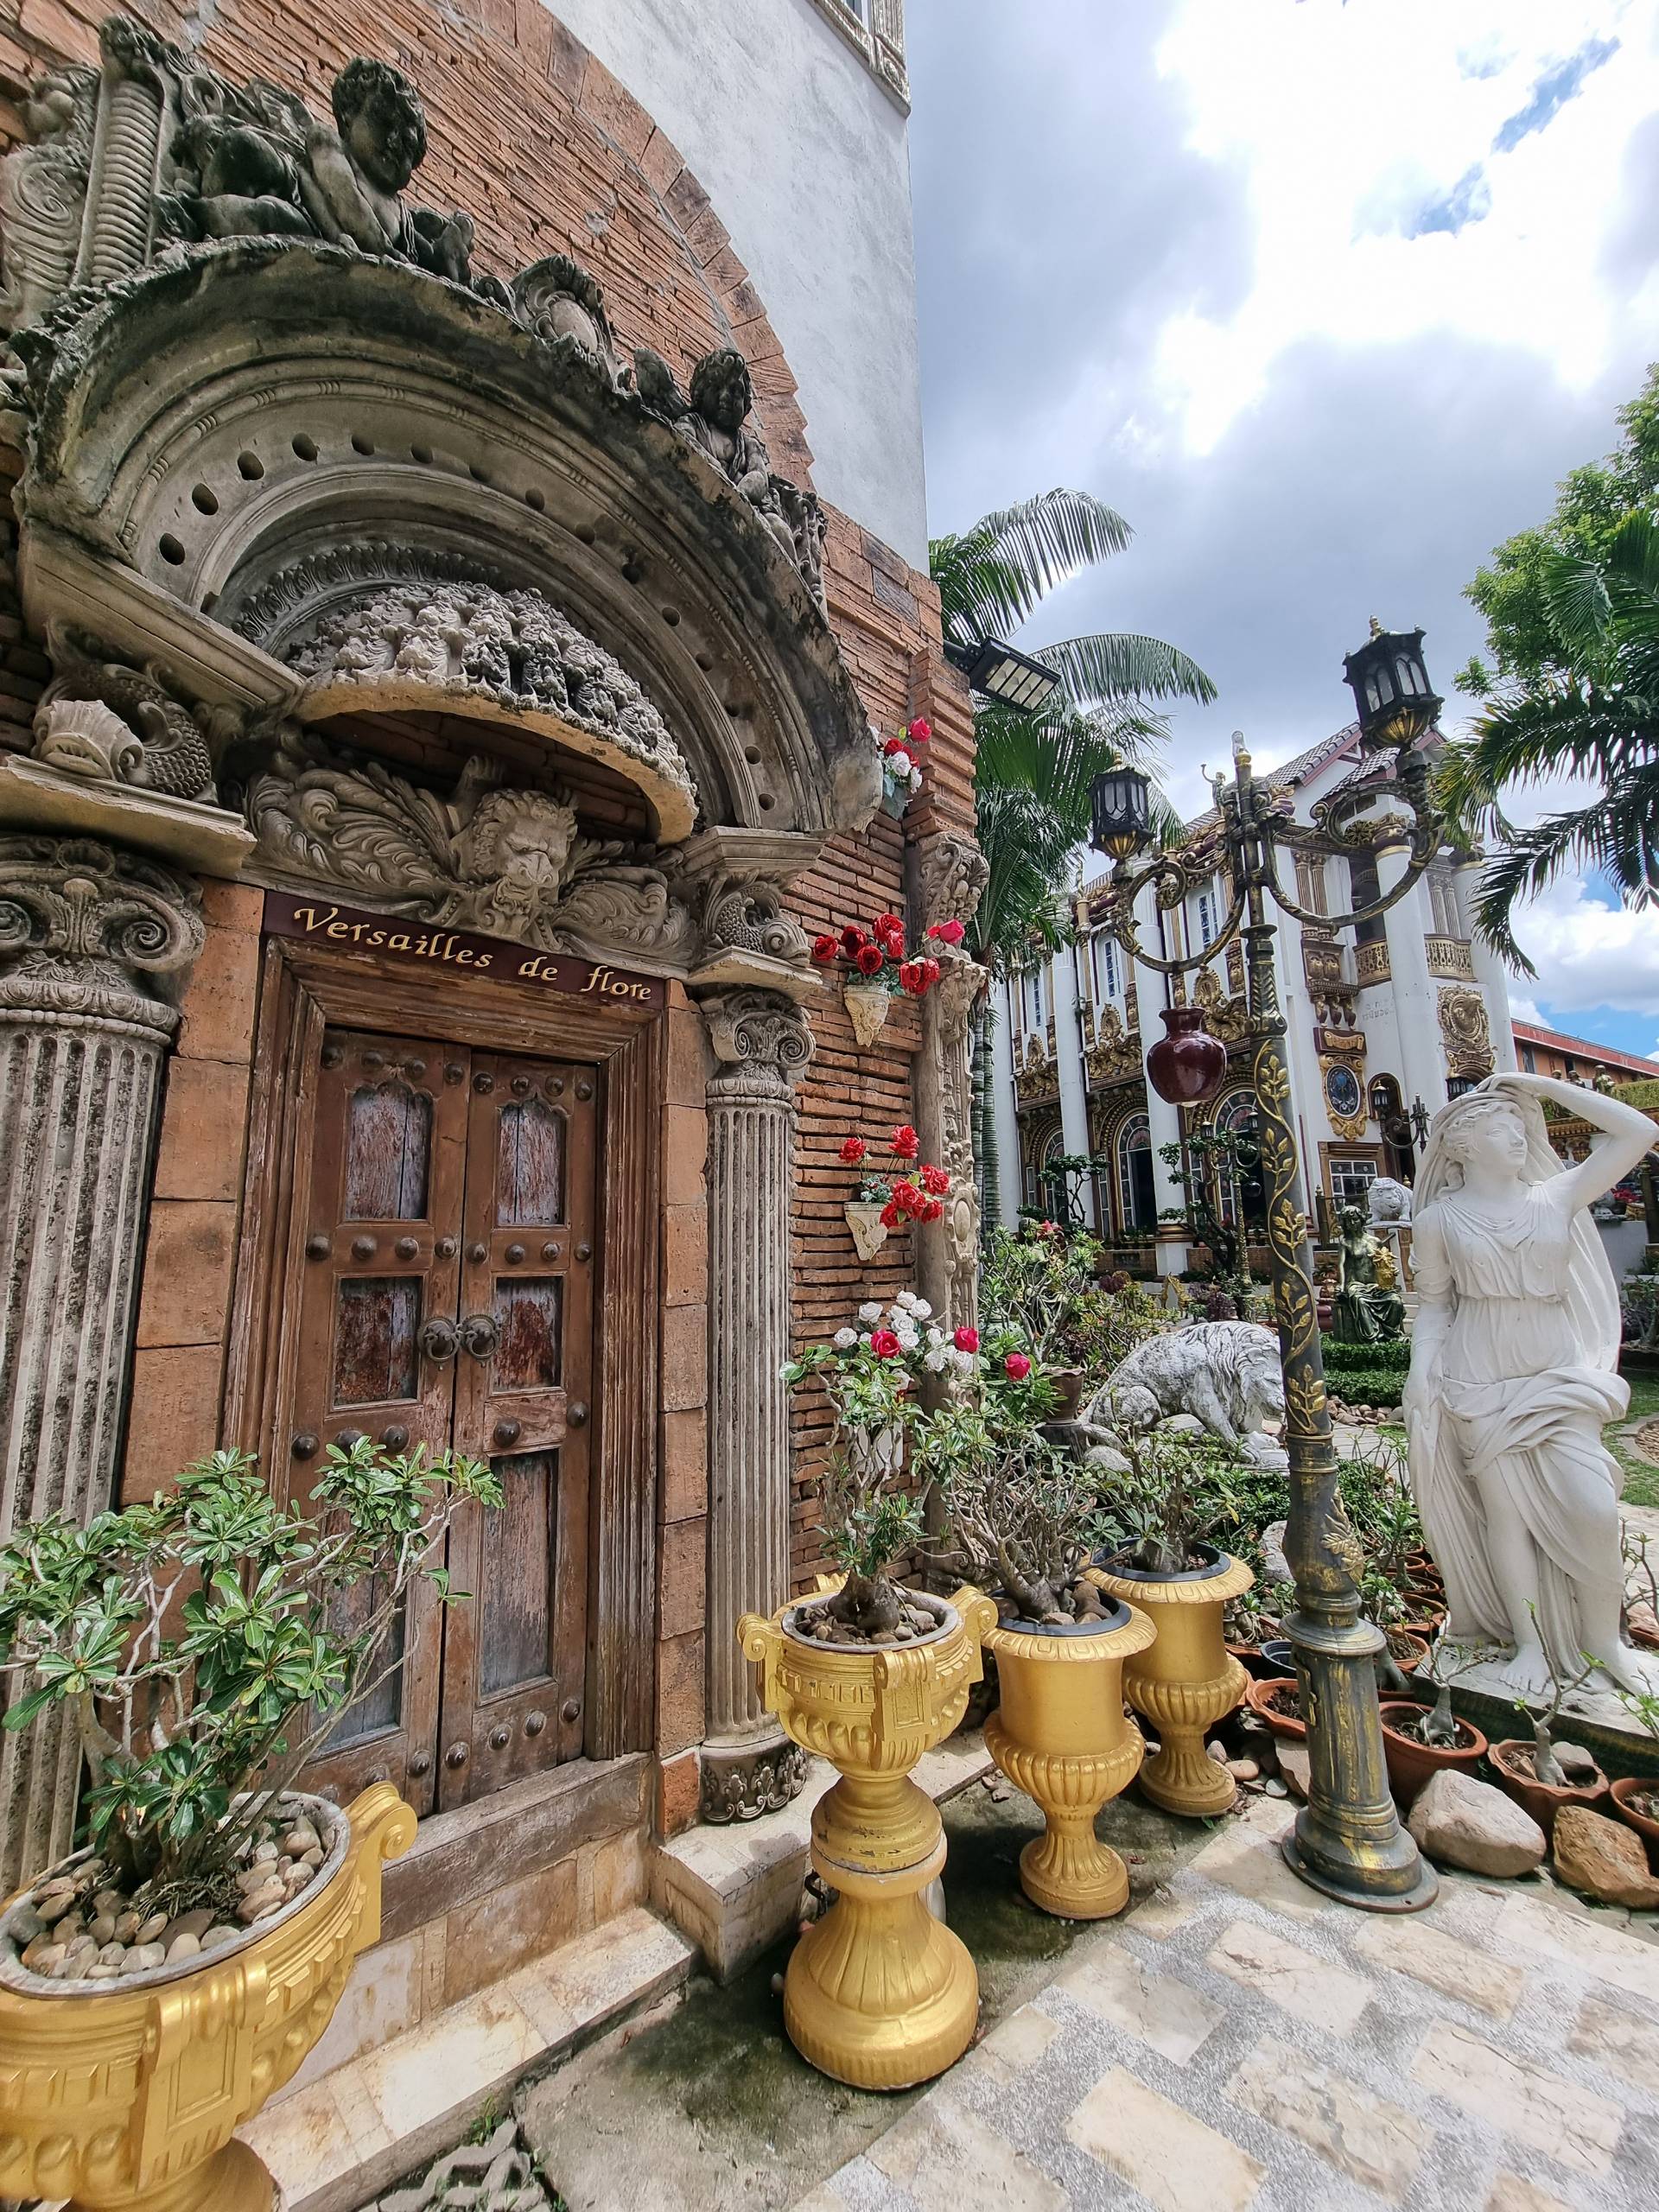 Versailles de Flore Cafe in Chiang Mai